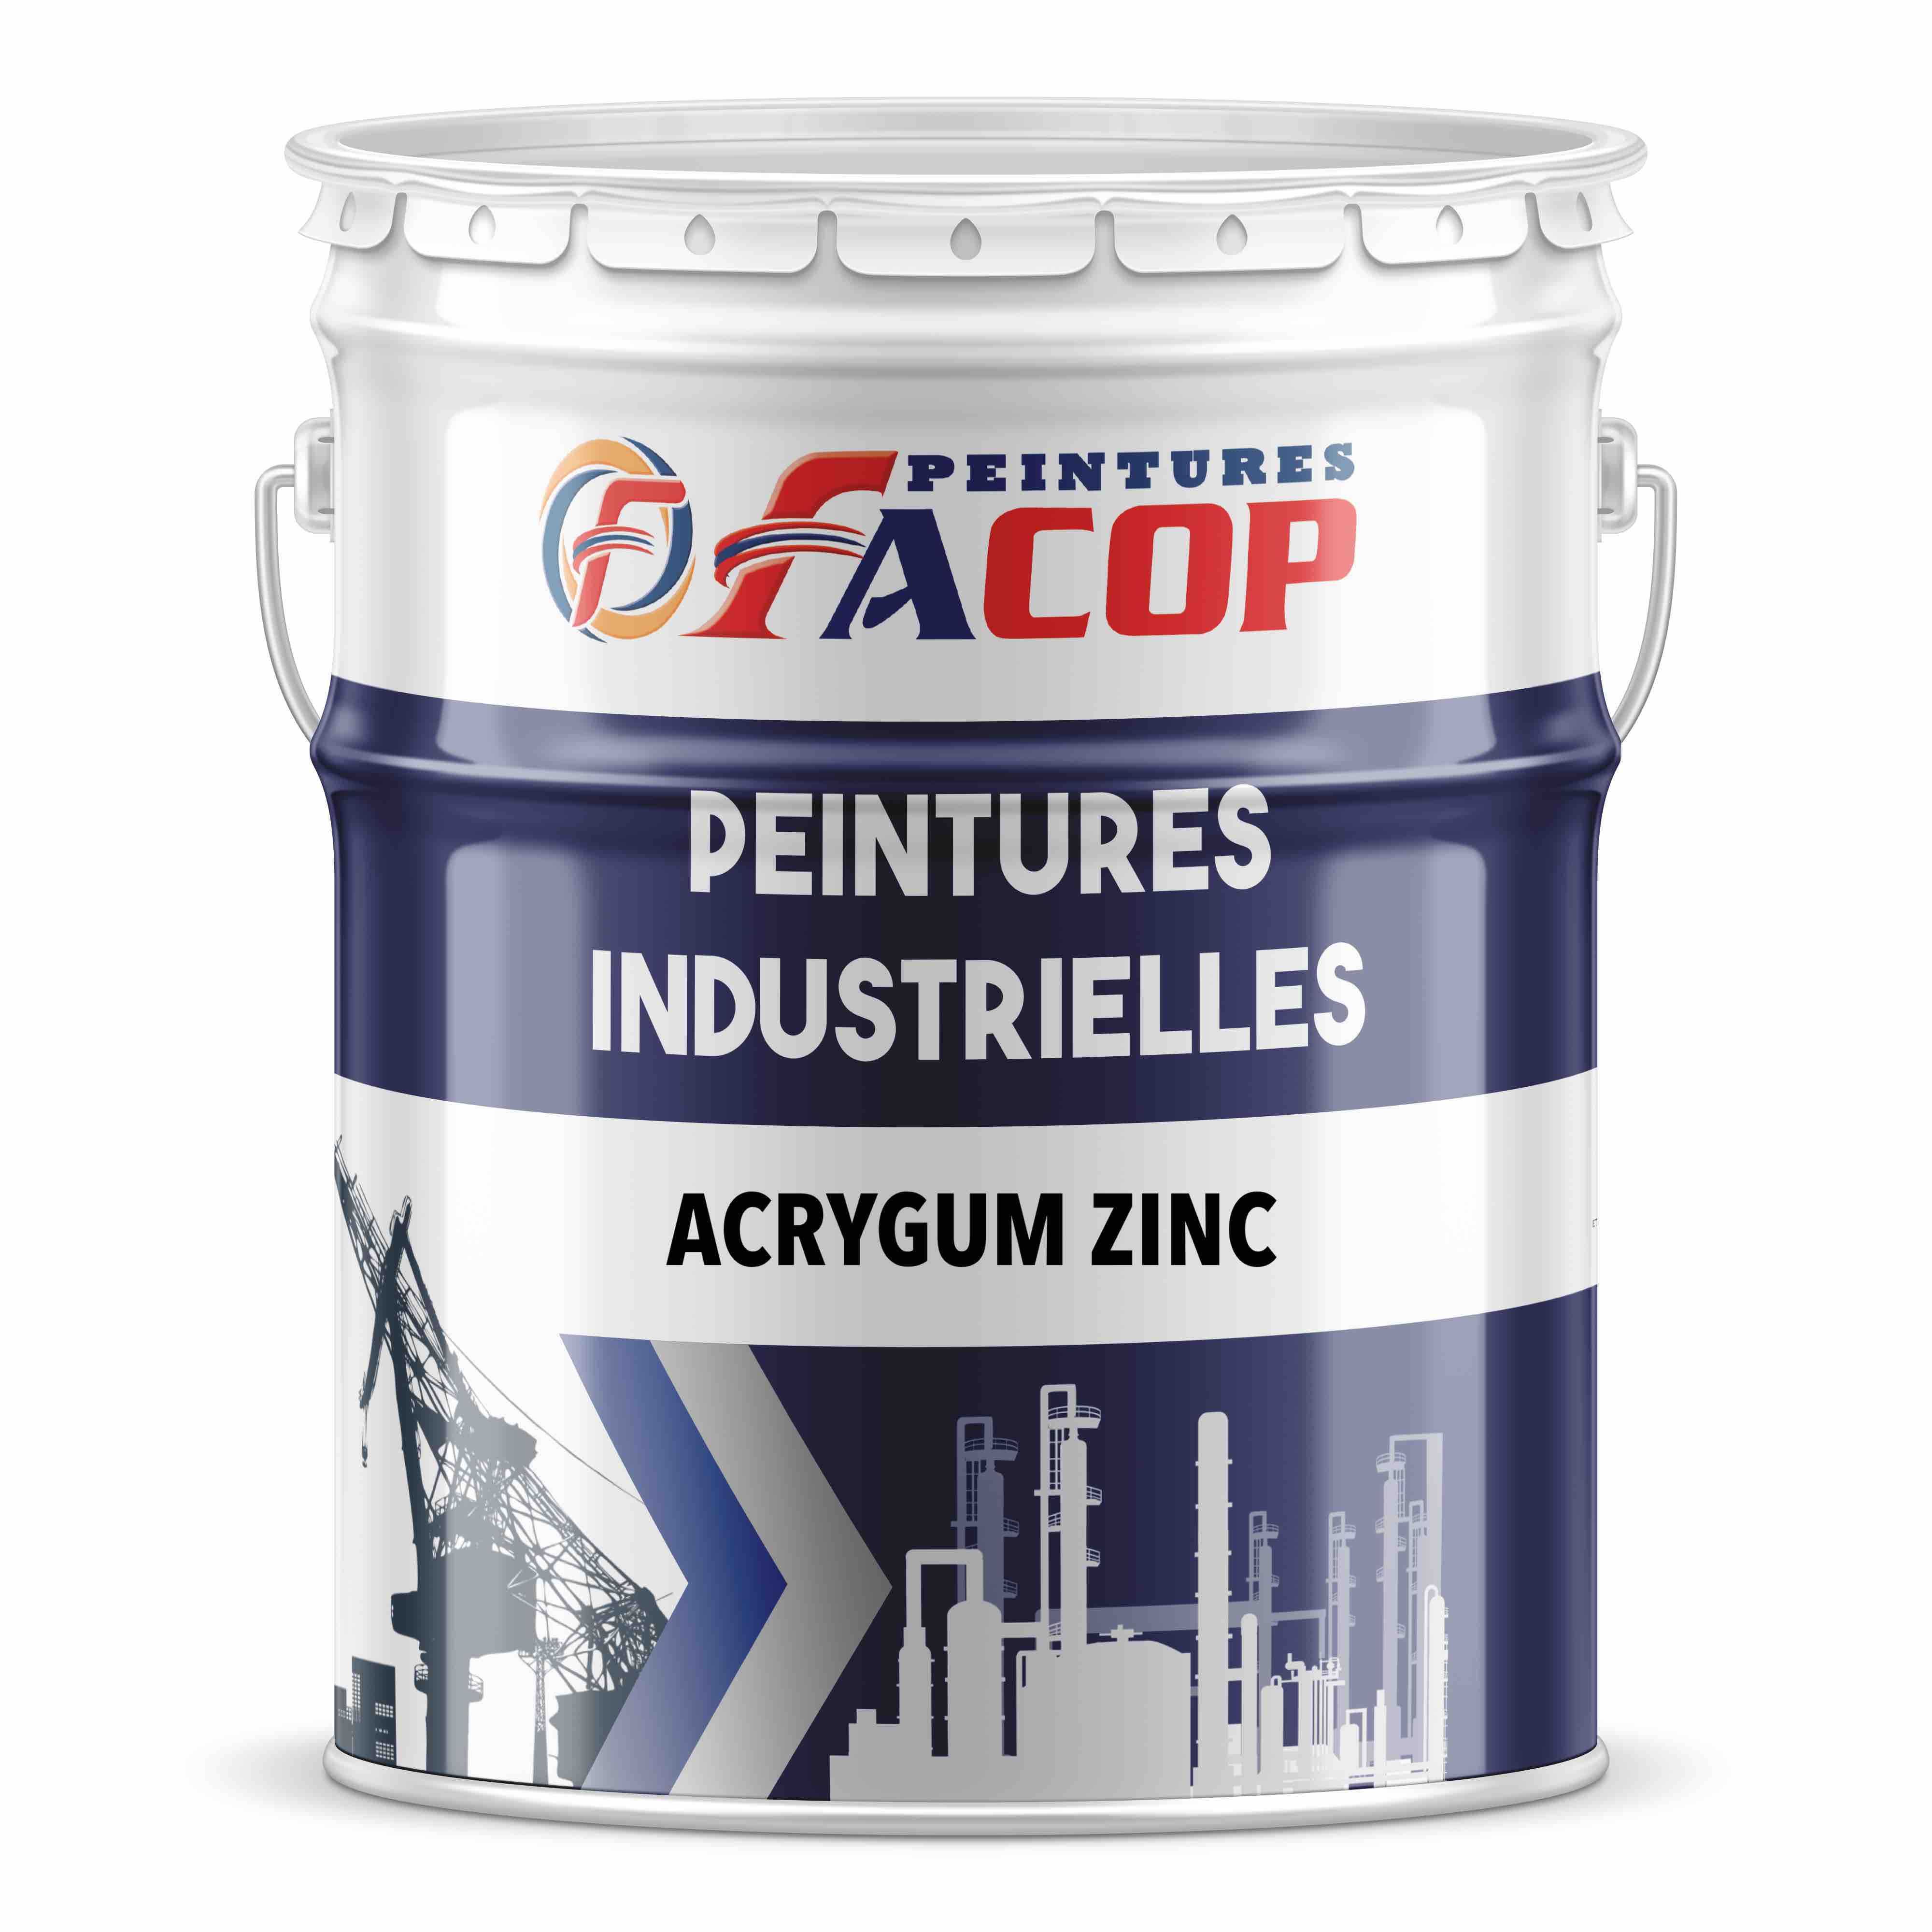 Acrygum zinc